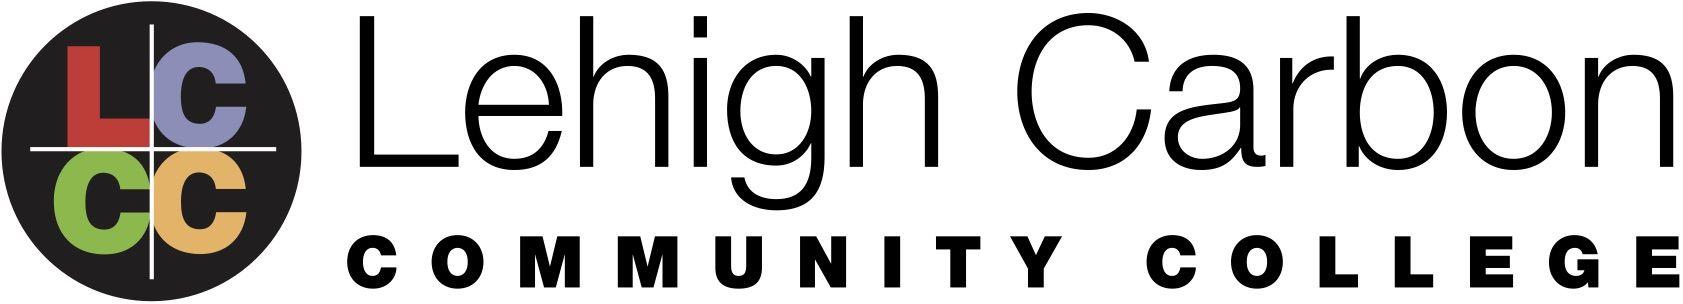 LCCC Logo - Lehigh Carbon Community College | Schnecksville, PA 18078